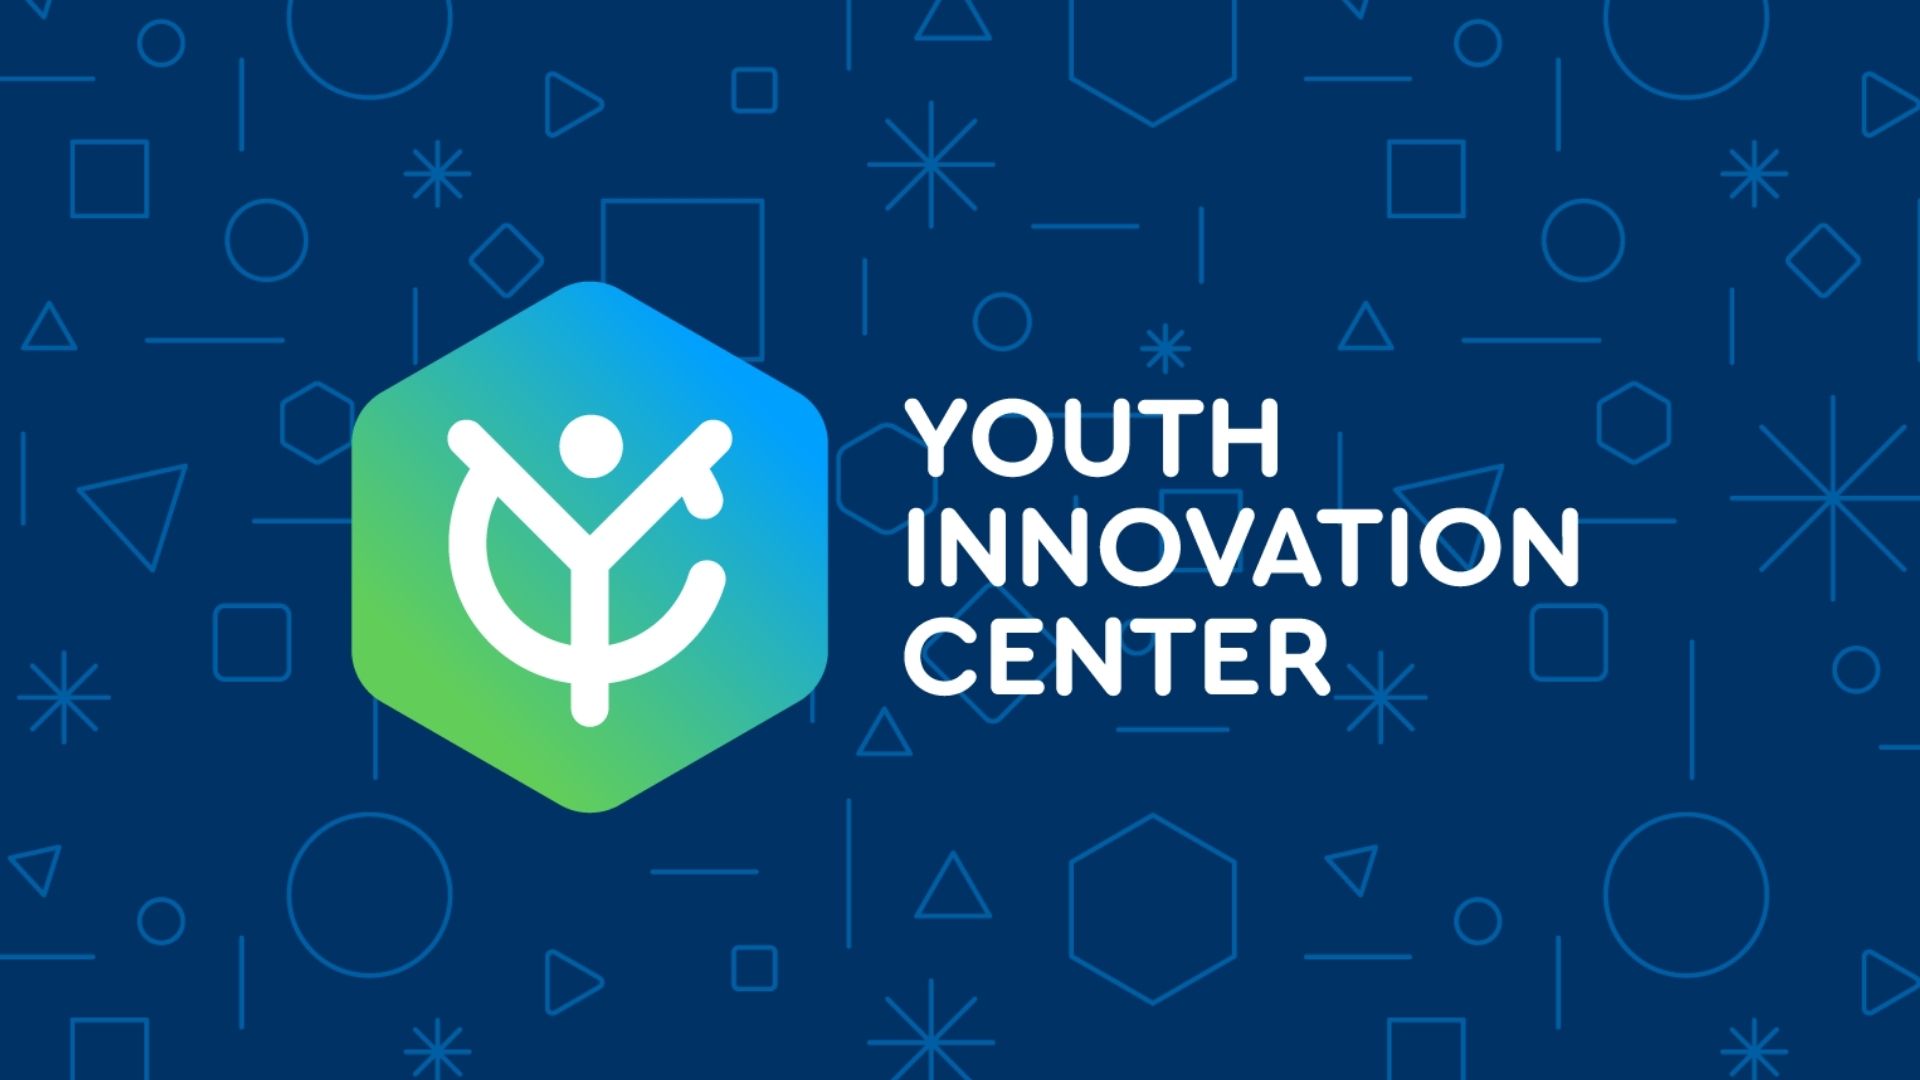 Youth Innovation Center 2021/22.